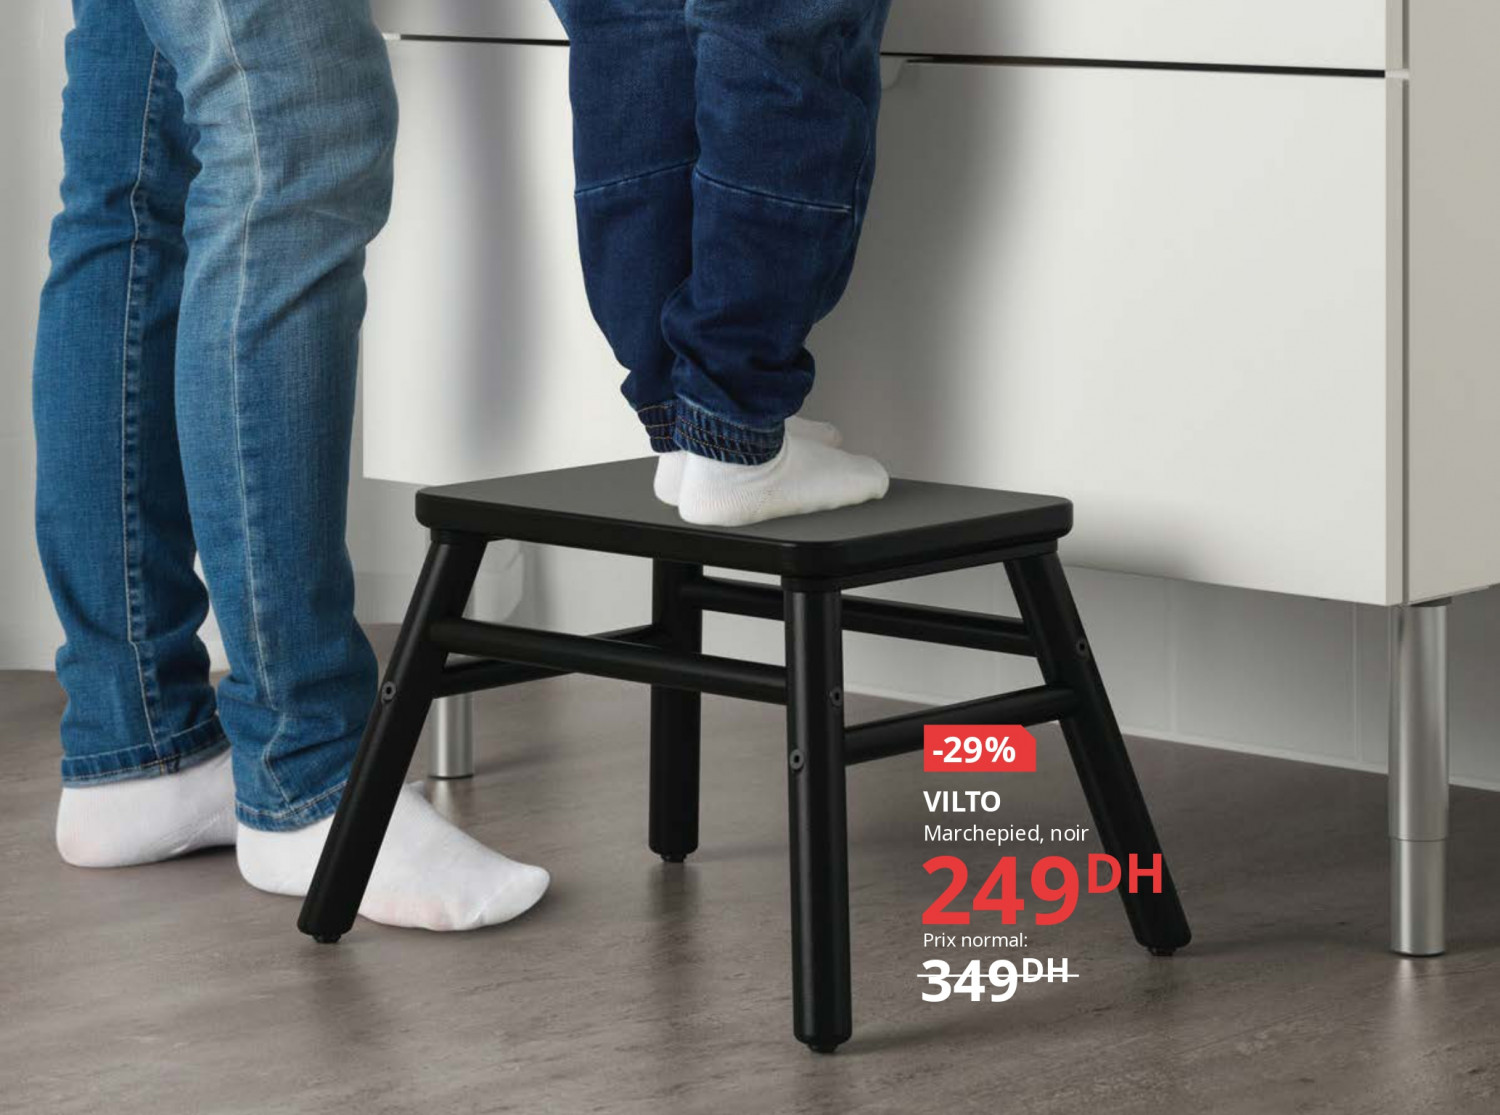 Ikea Maroc promotions decembre 2021